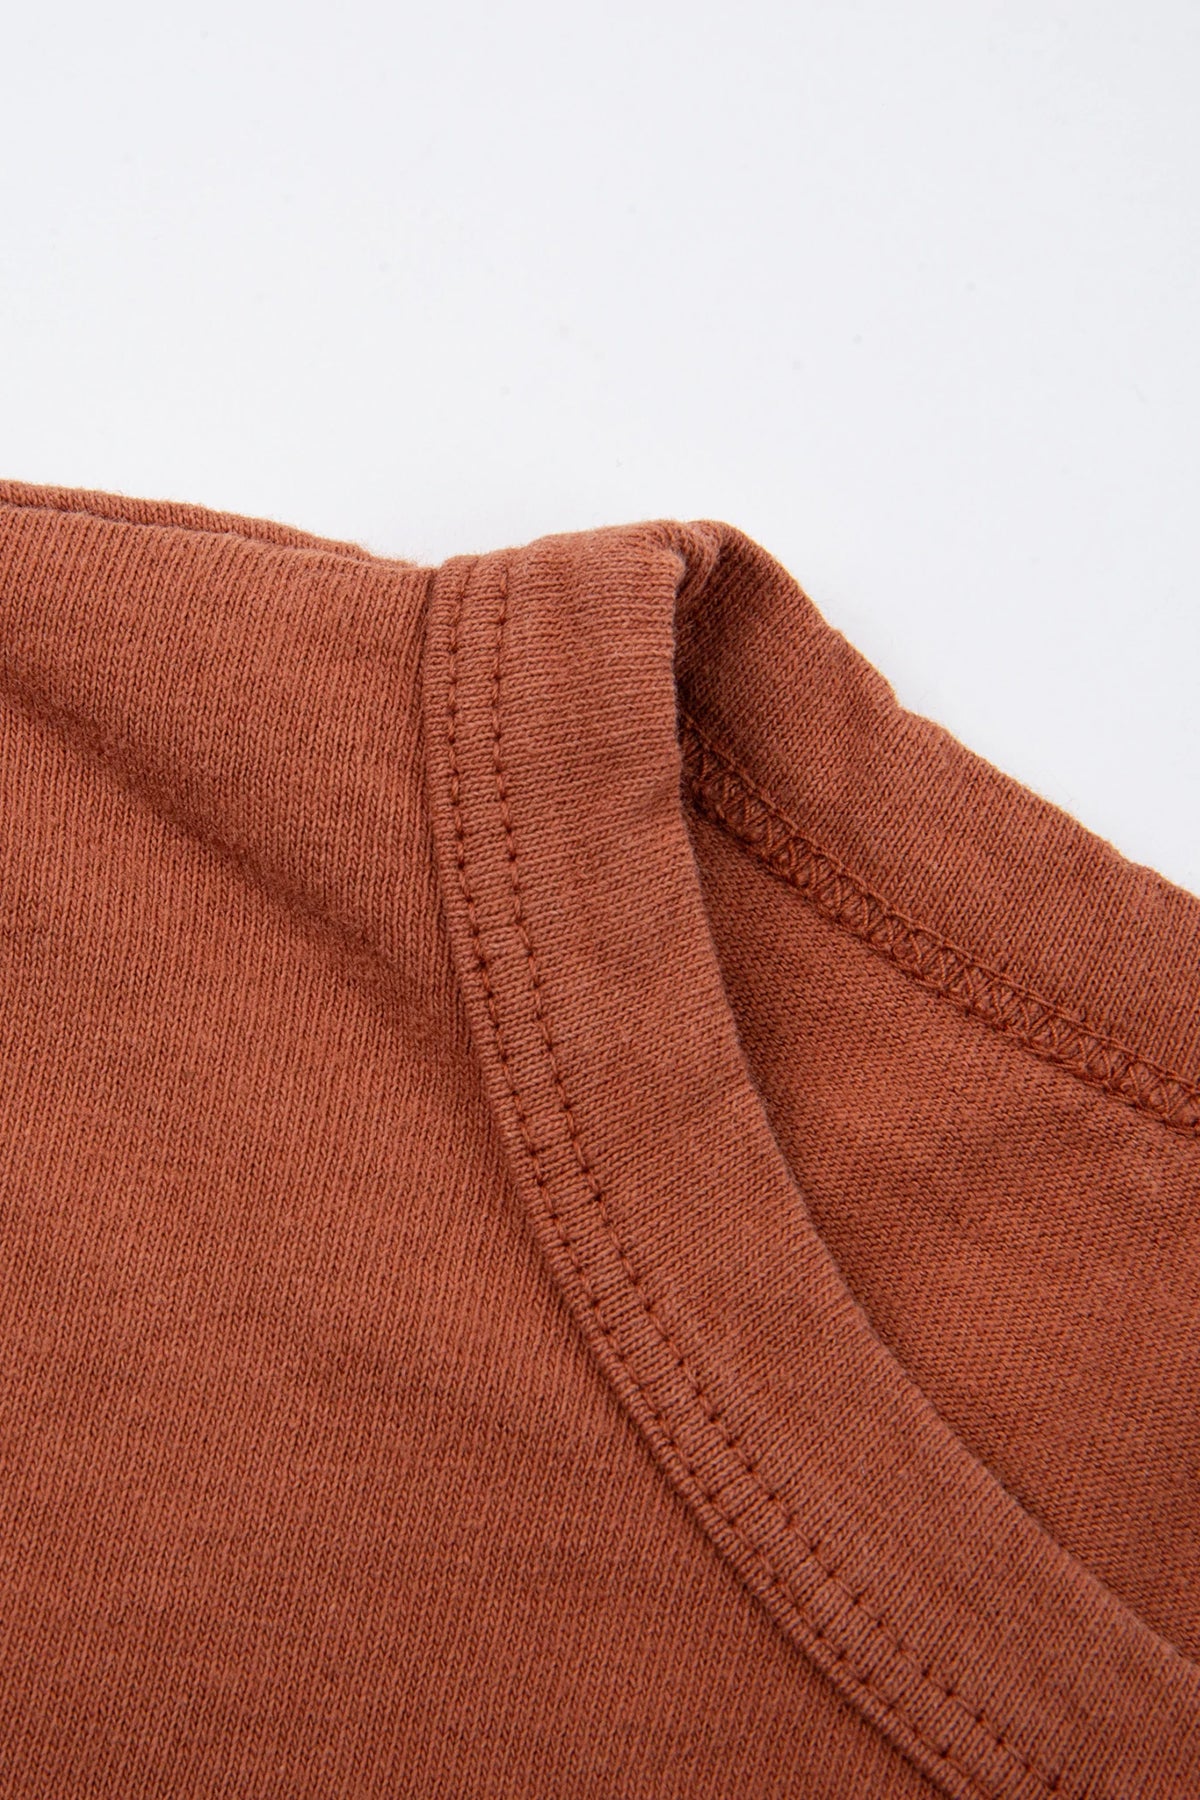 Freenote Cloth - 9 Ounce Pocket Tee - Rust